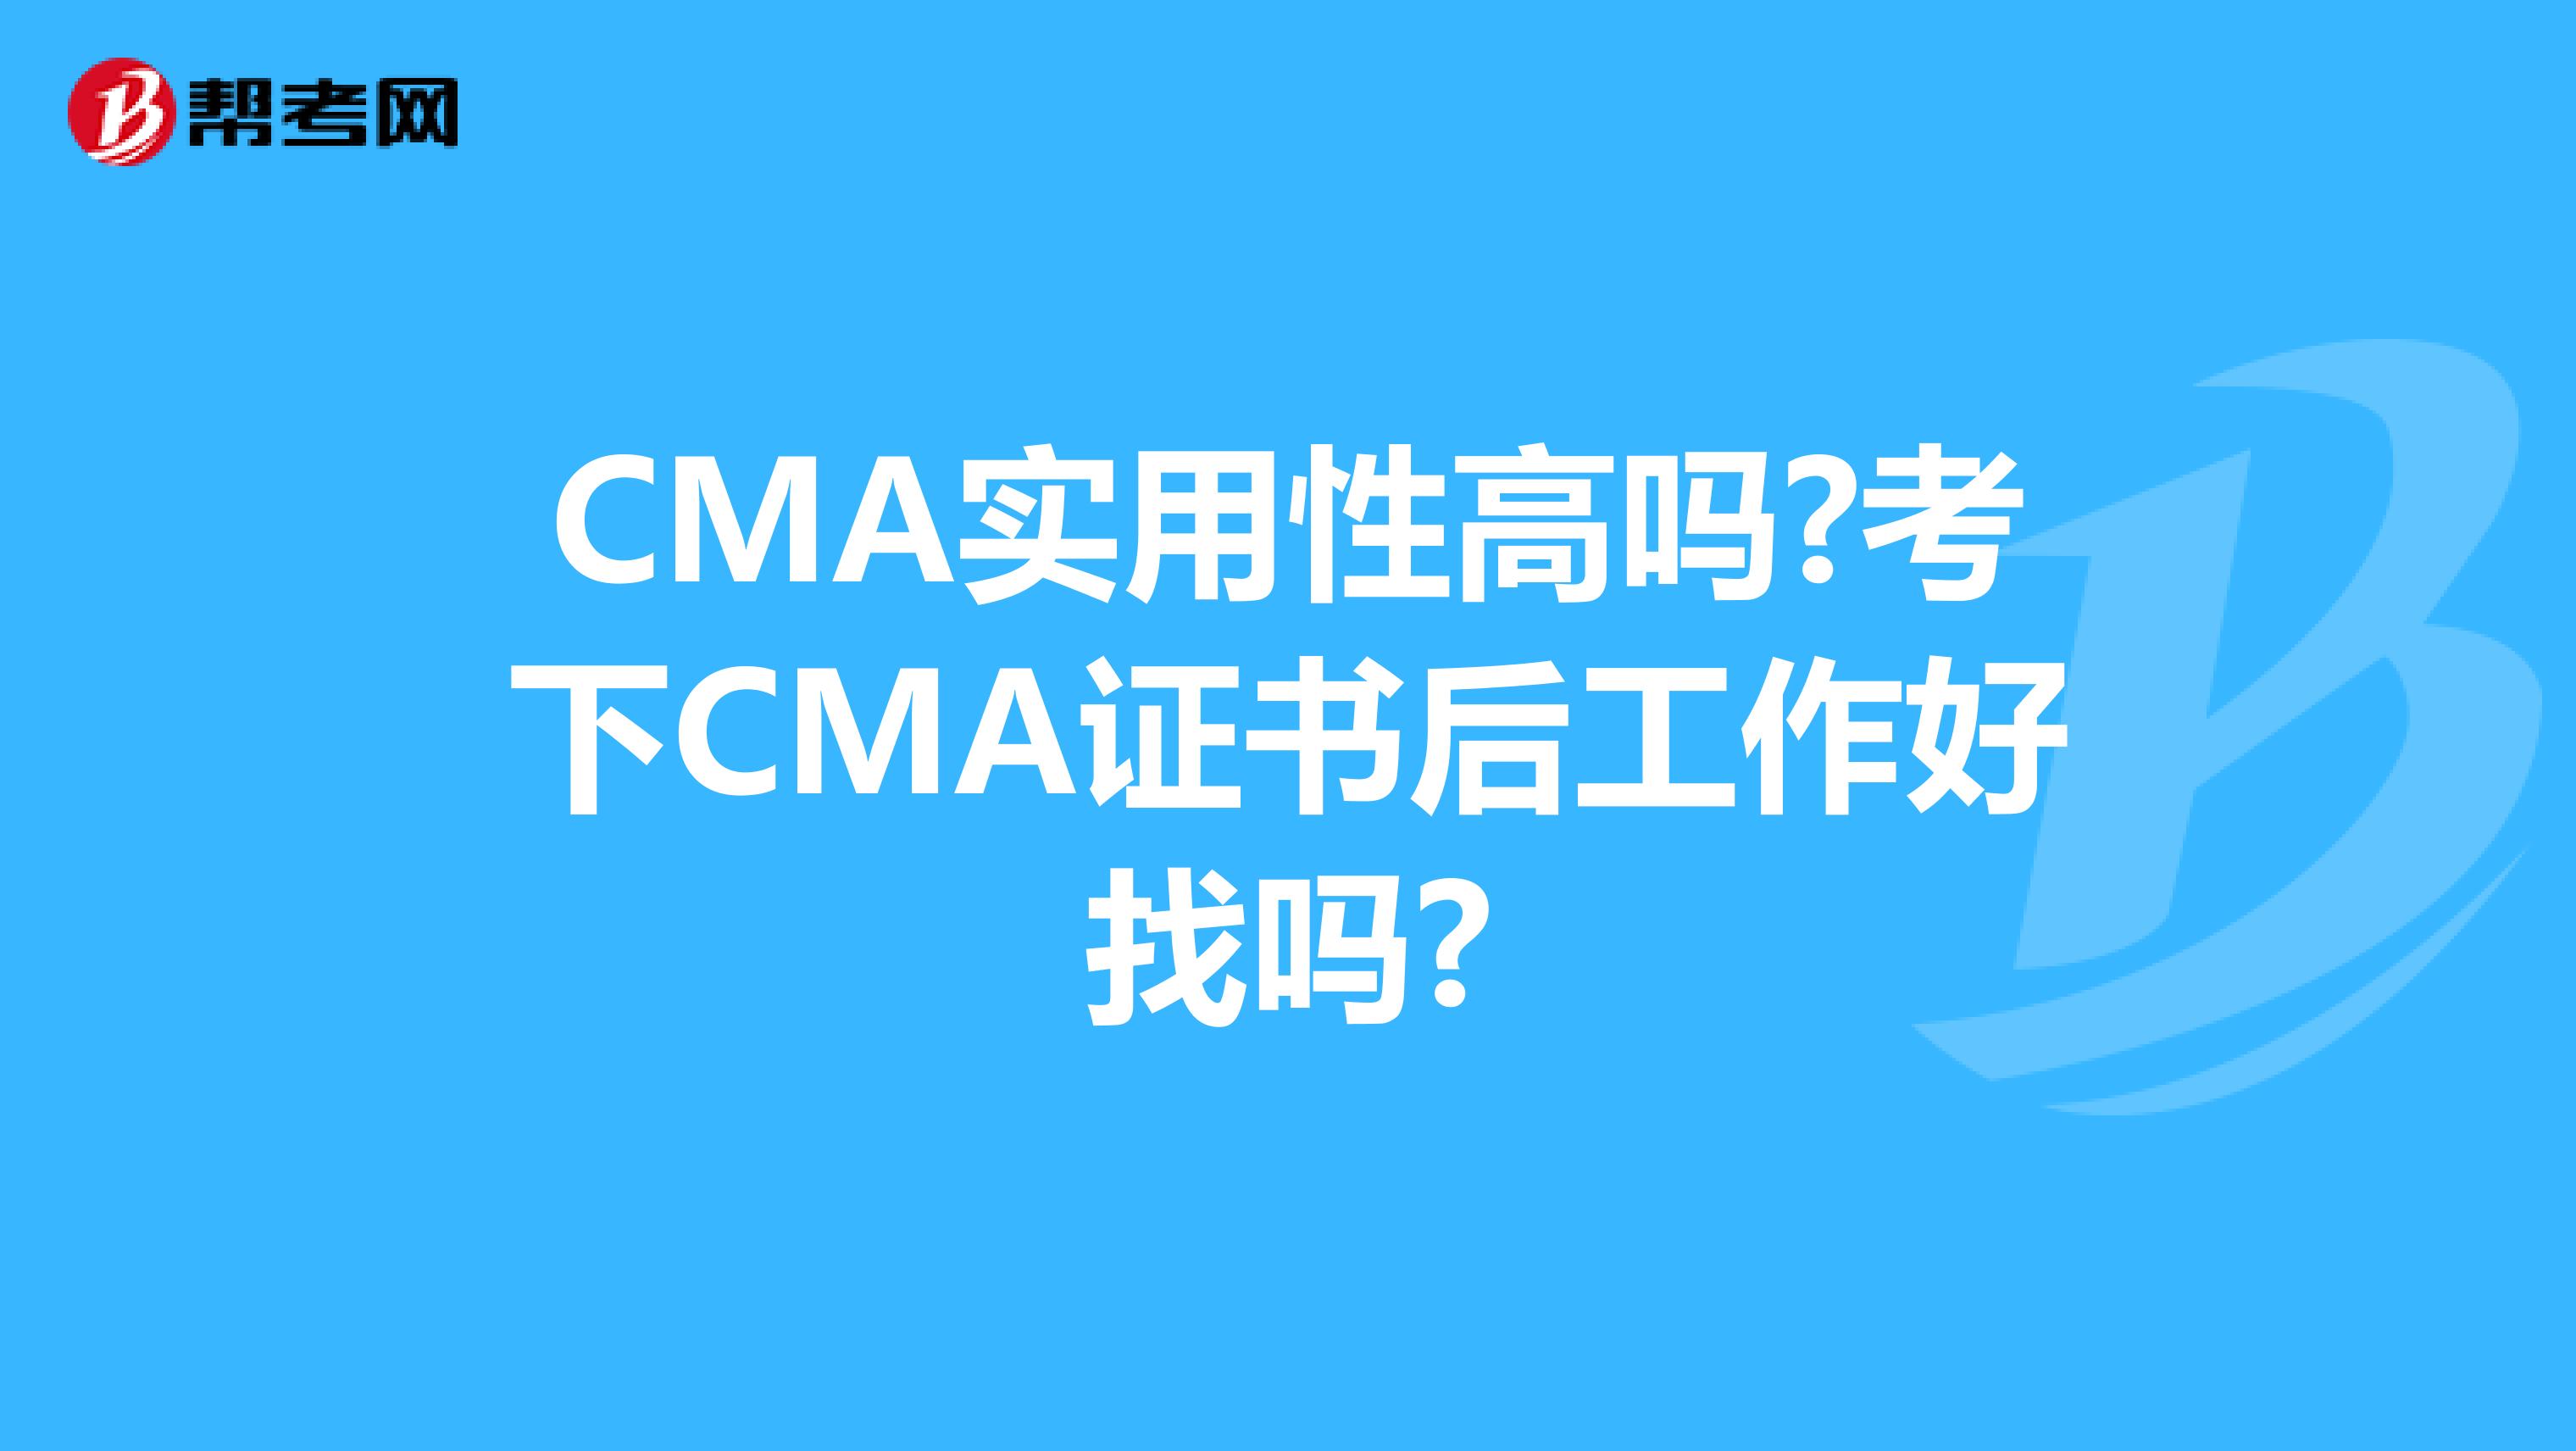 CMA实用性高吗?考下CMA证书后工作好找吗?